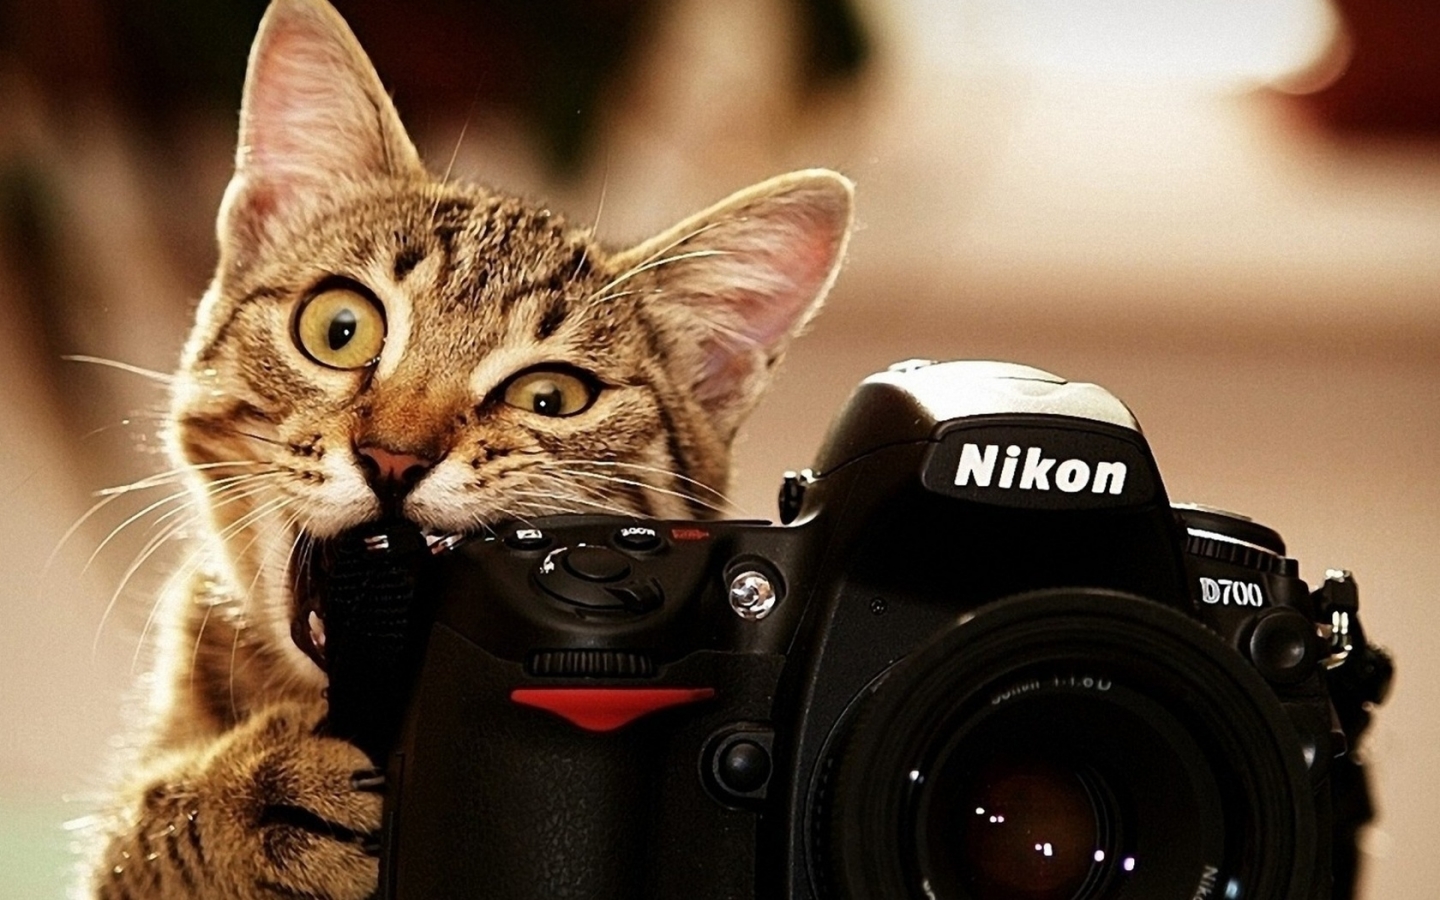 Nikon Cat for 1440 x 900 widescreen resolution